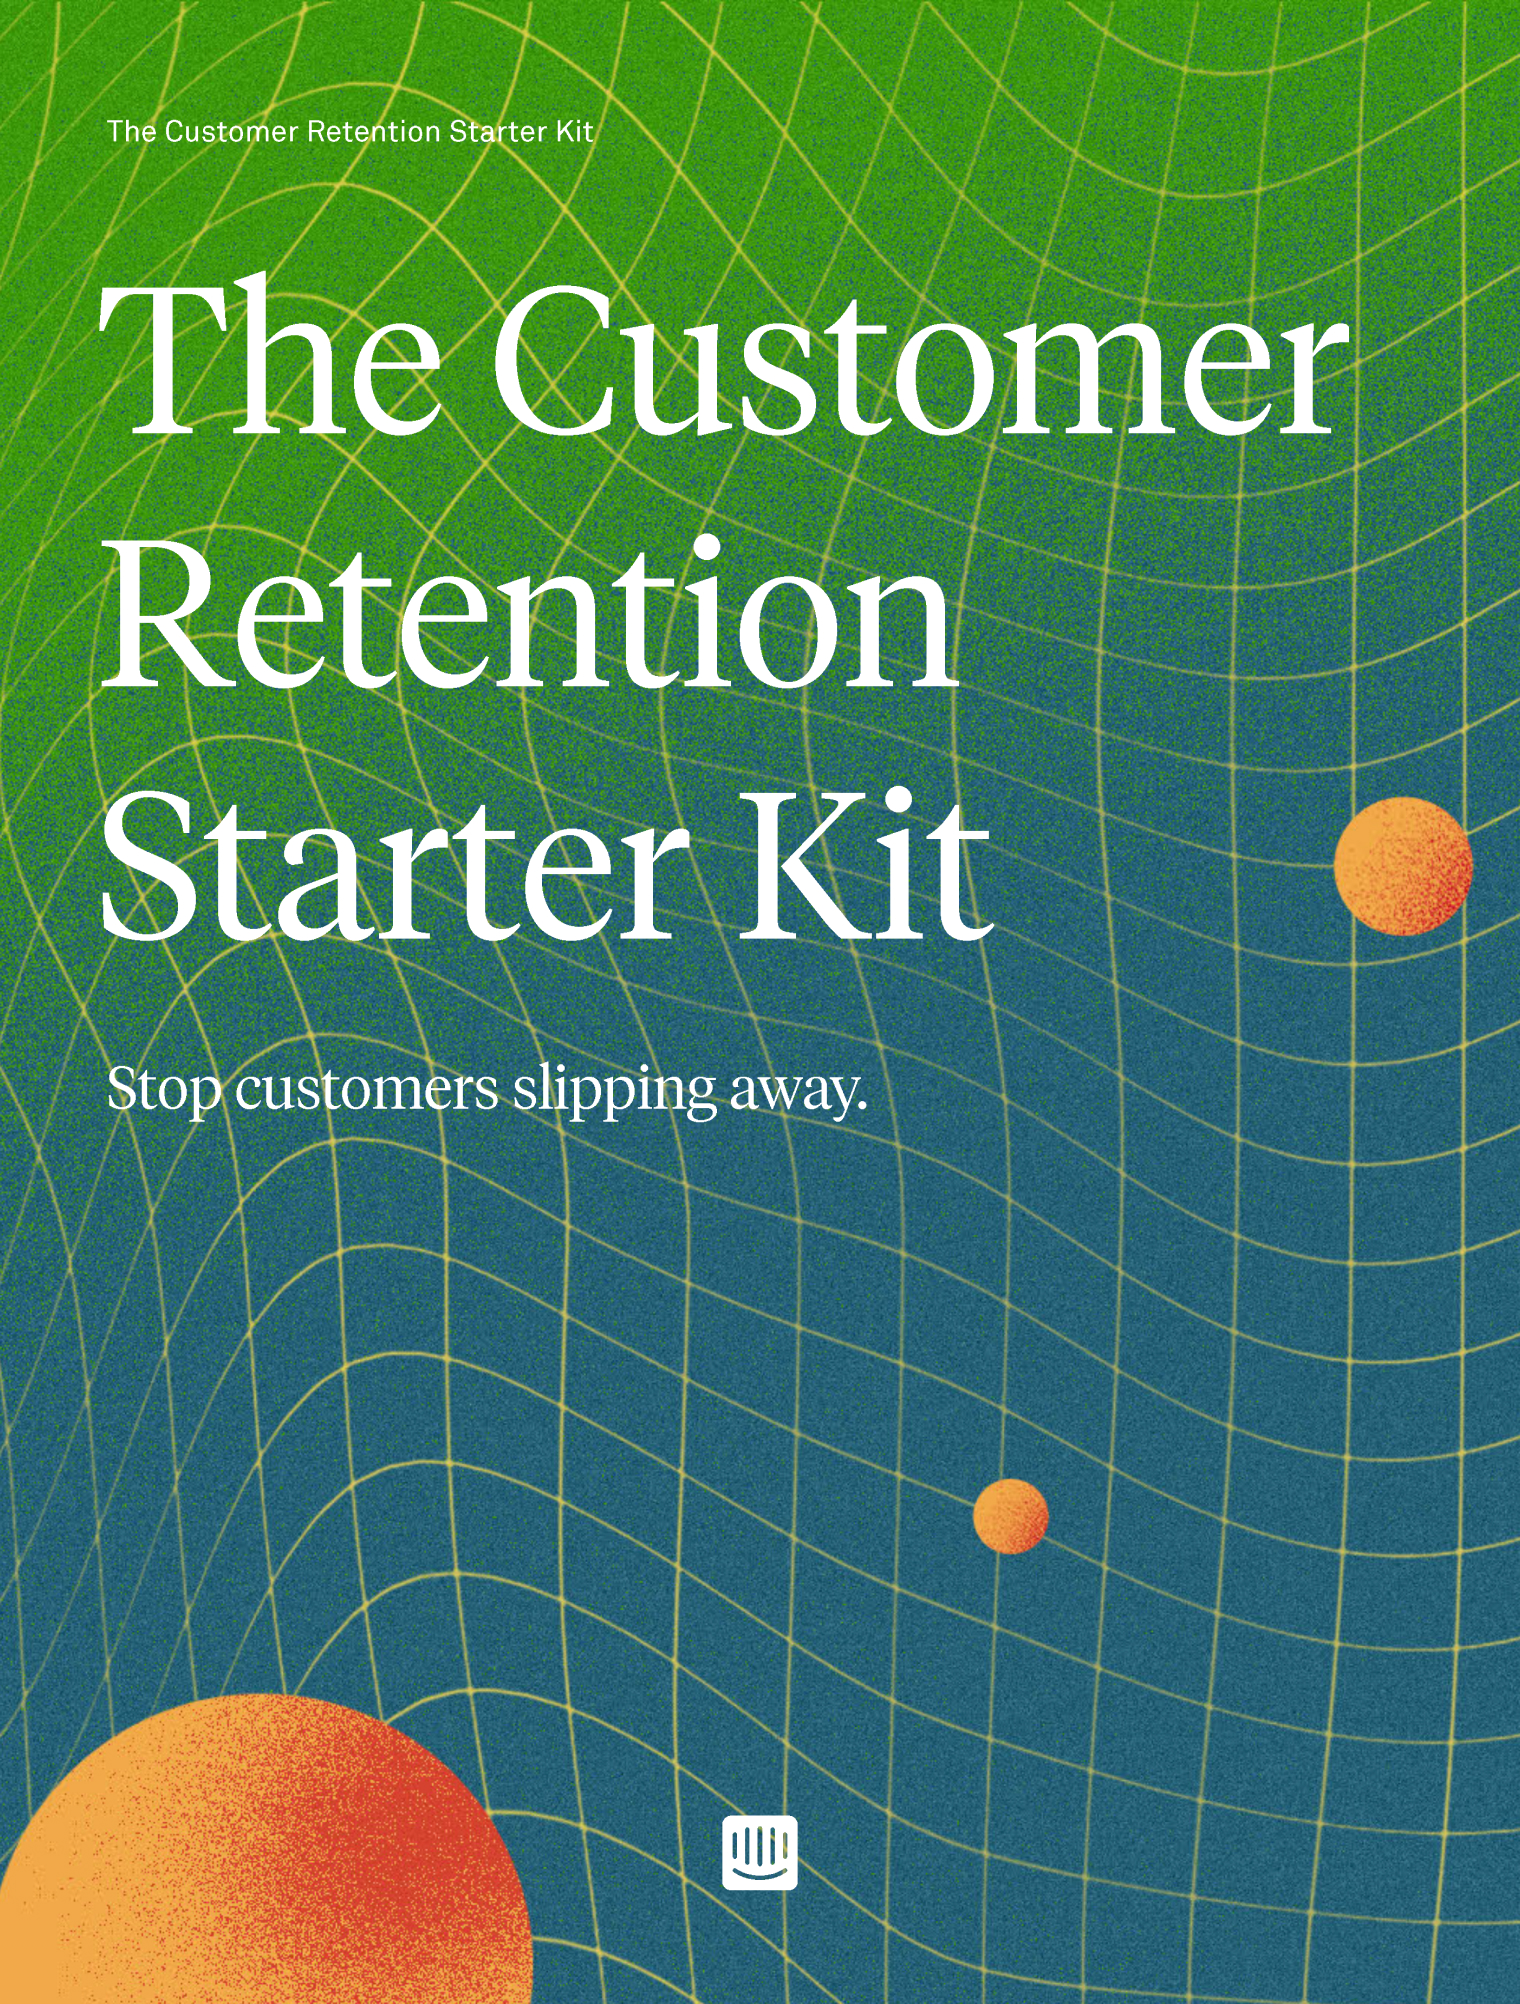 The Customer Retention Kit